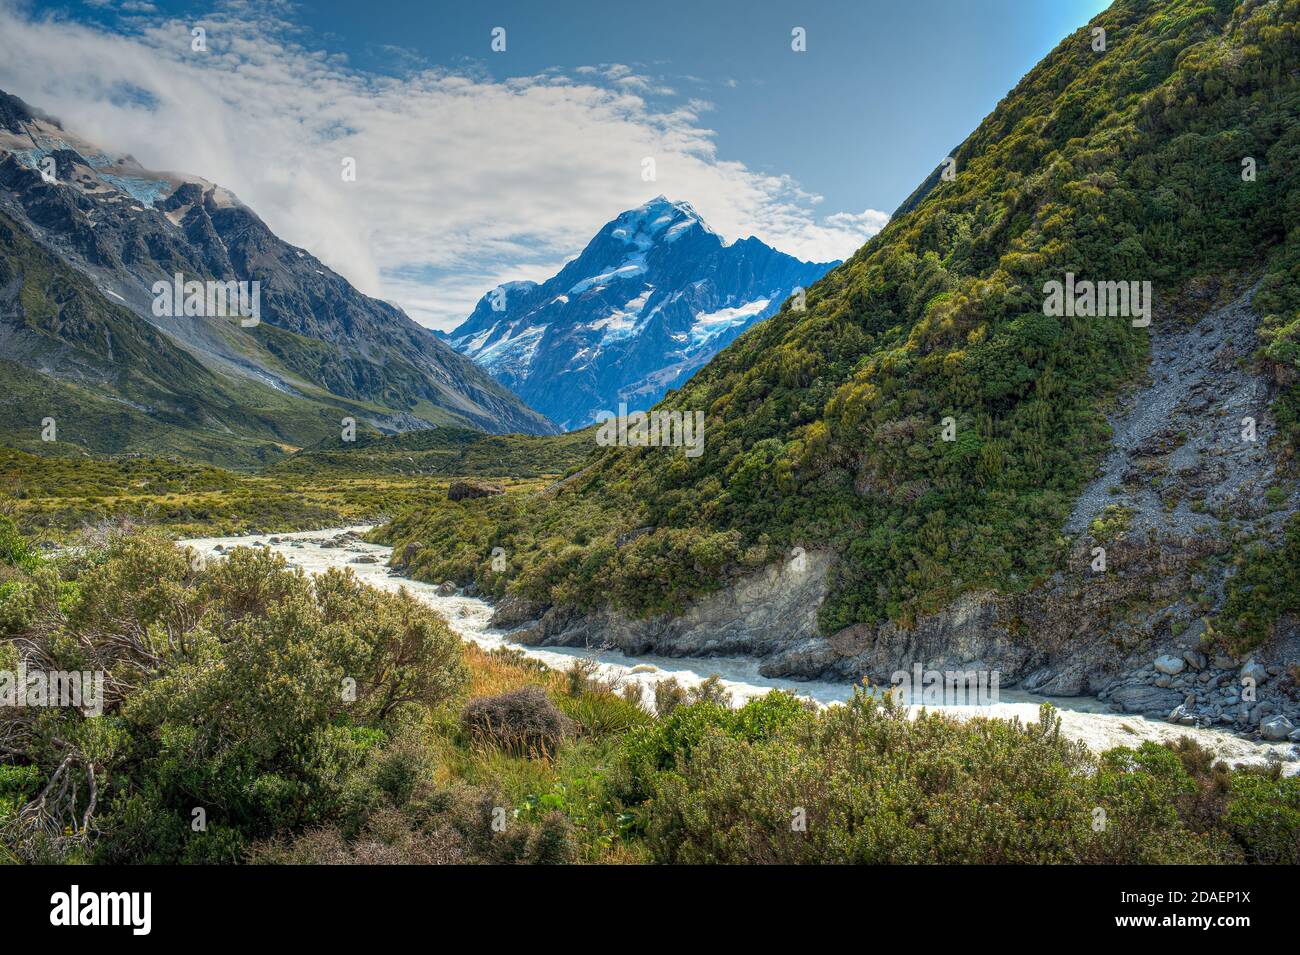 The very scenic Aoraki National Park in New Zealand. Stock Photo